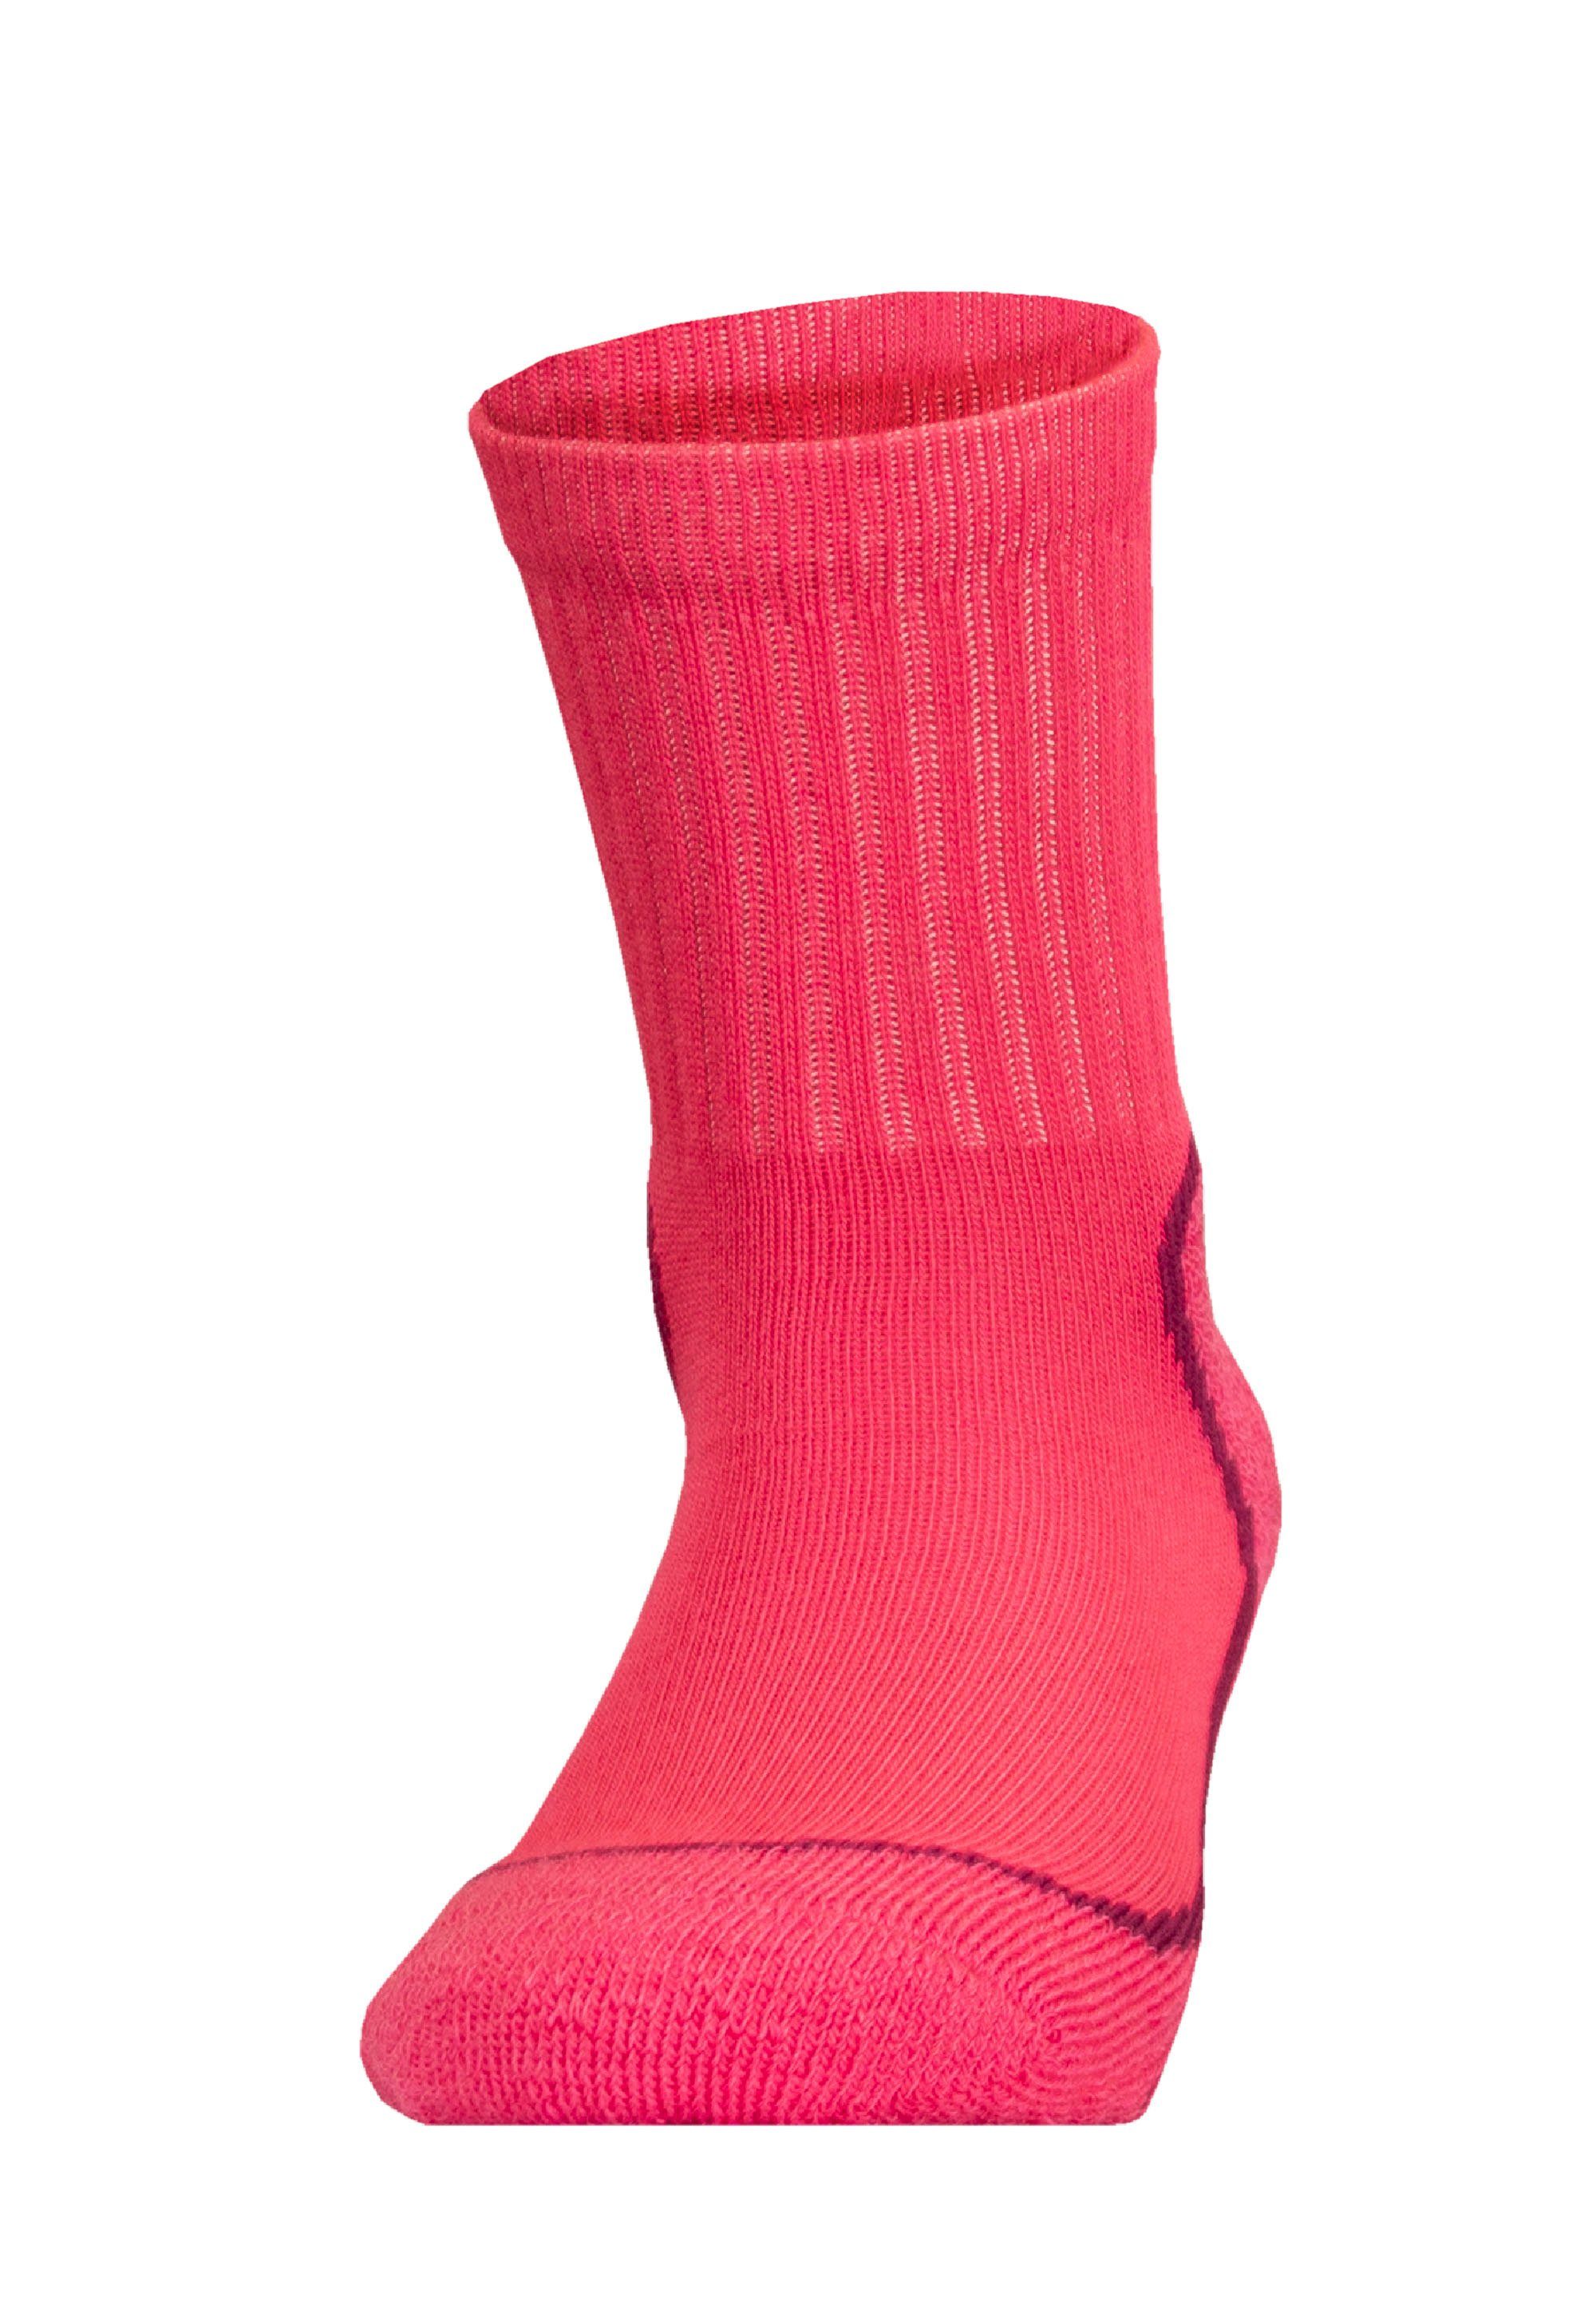 UphillSport Socken KEVO JR mehrlagiger Struktur rosa Coolmax (1-Paar) und mit